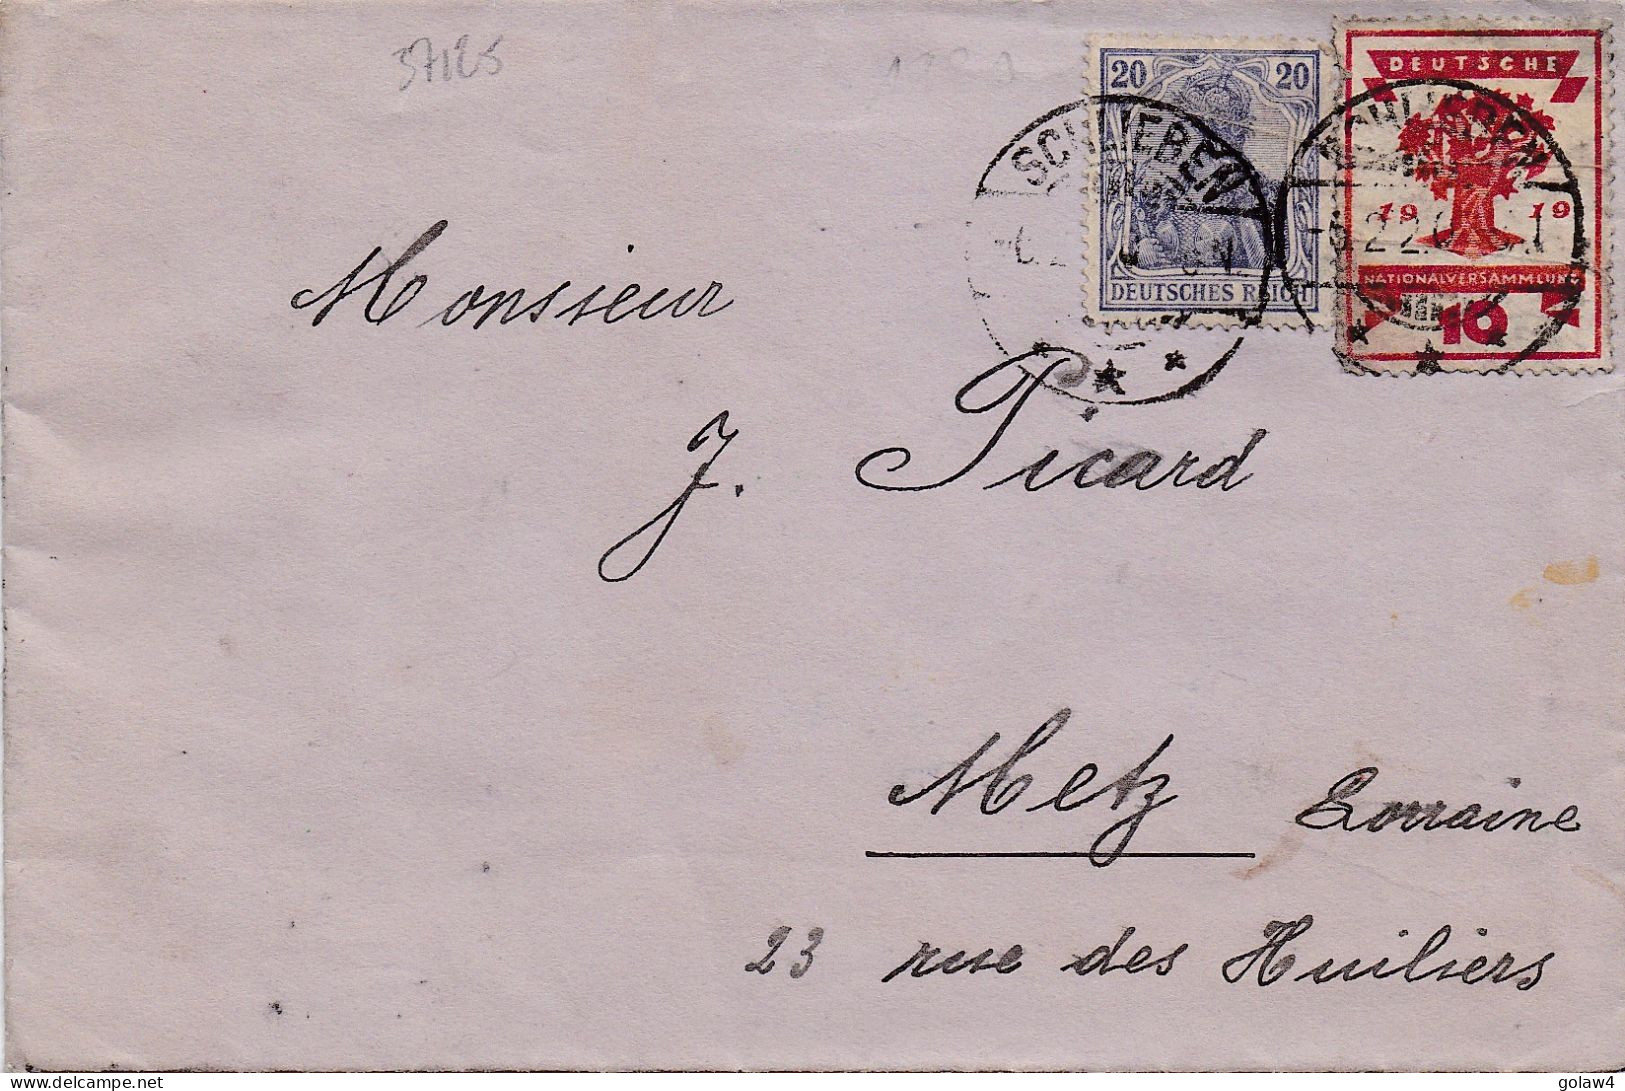 37125# LETTRE Obl SCHLIEBEN 1920 Pour METZ LORRAINE - Lettres & Documents